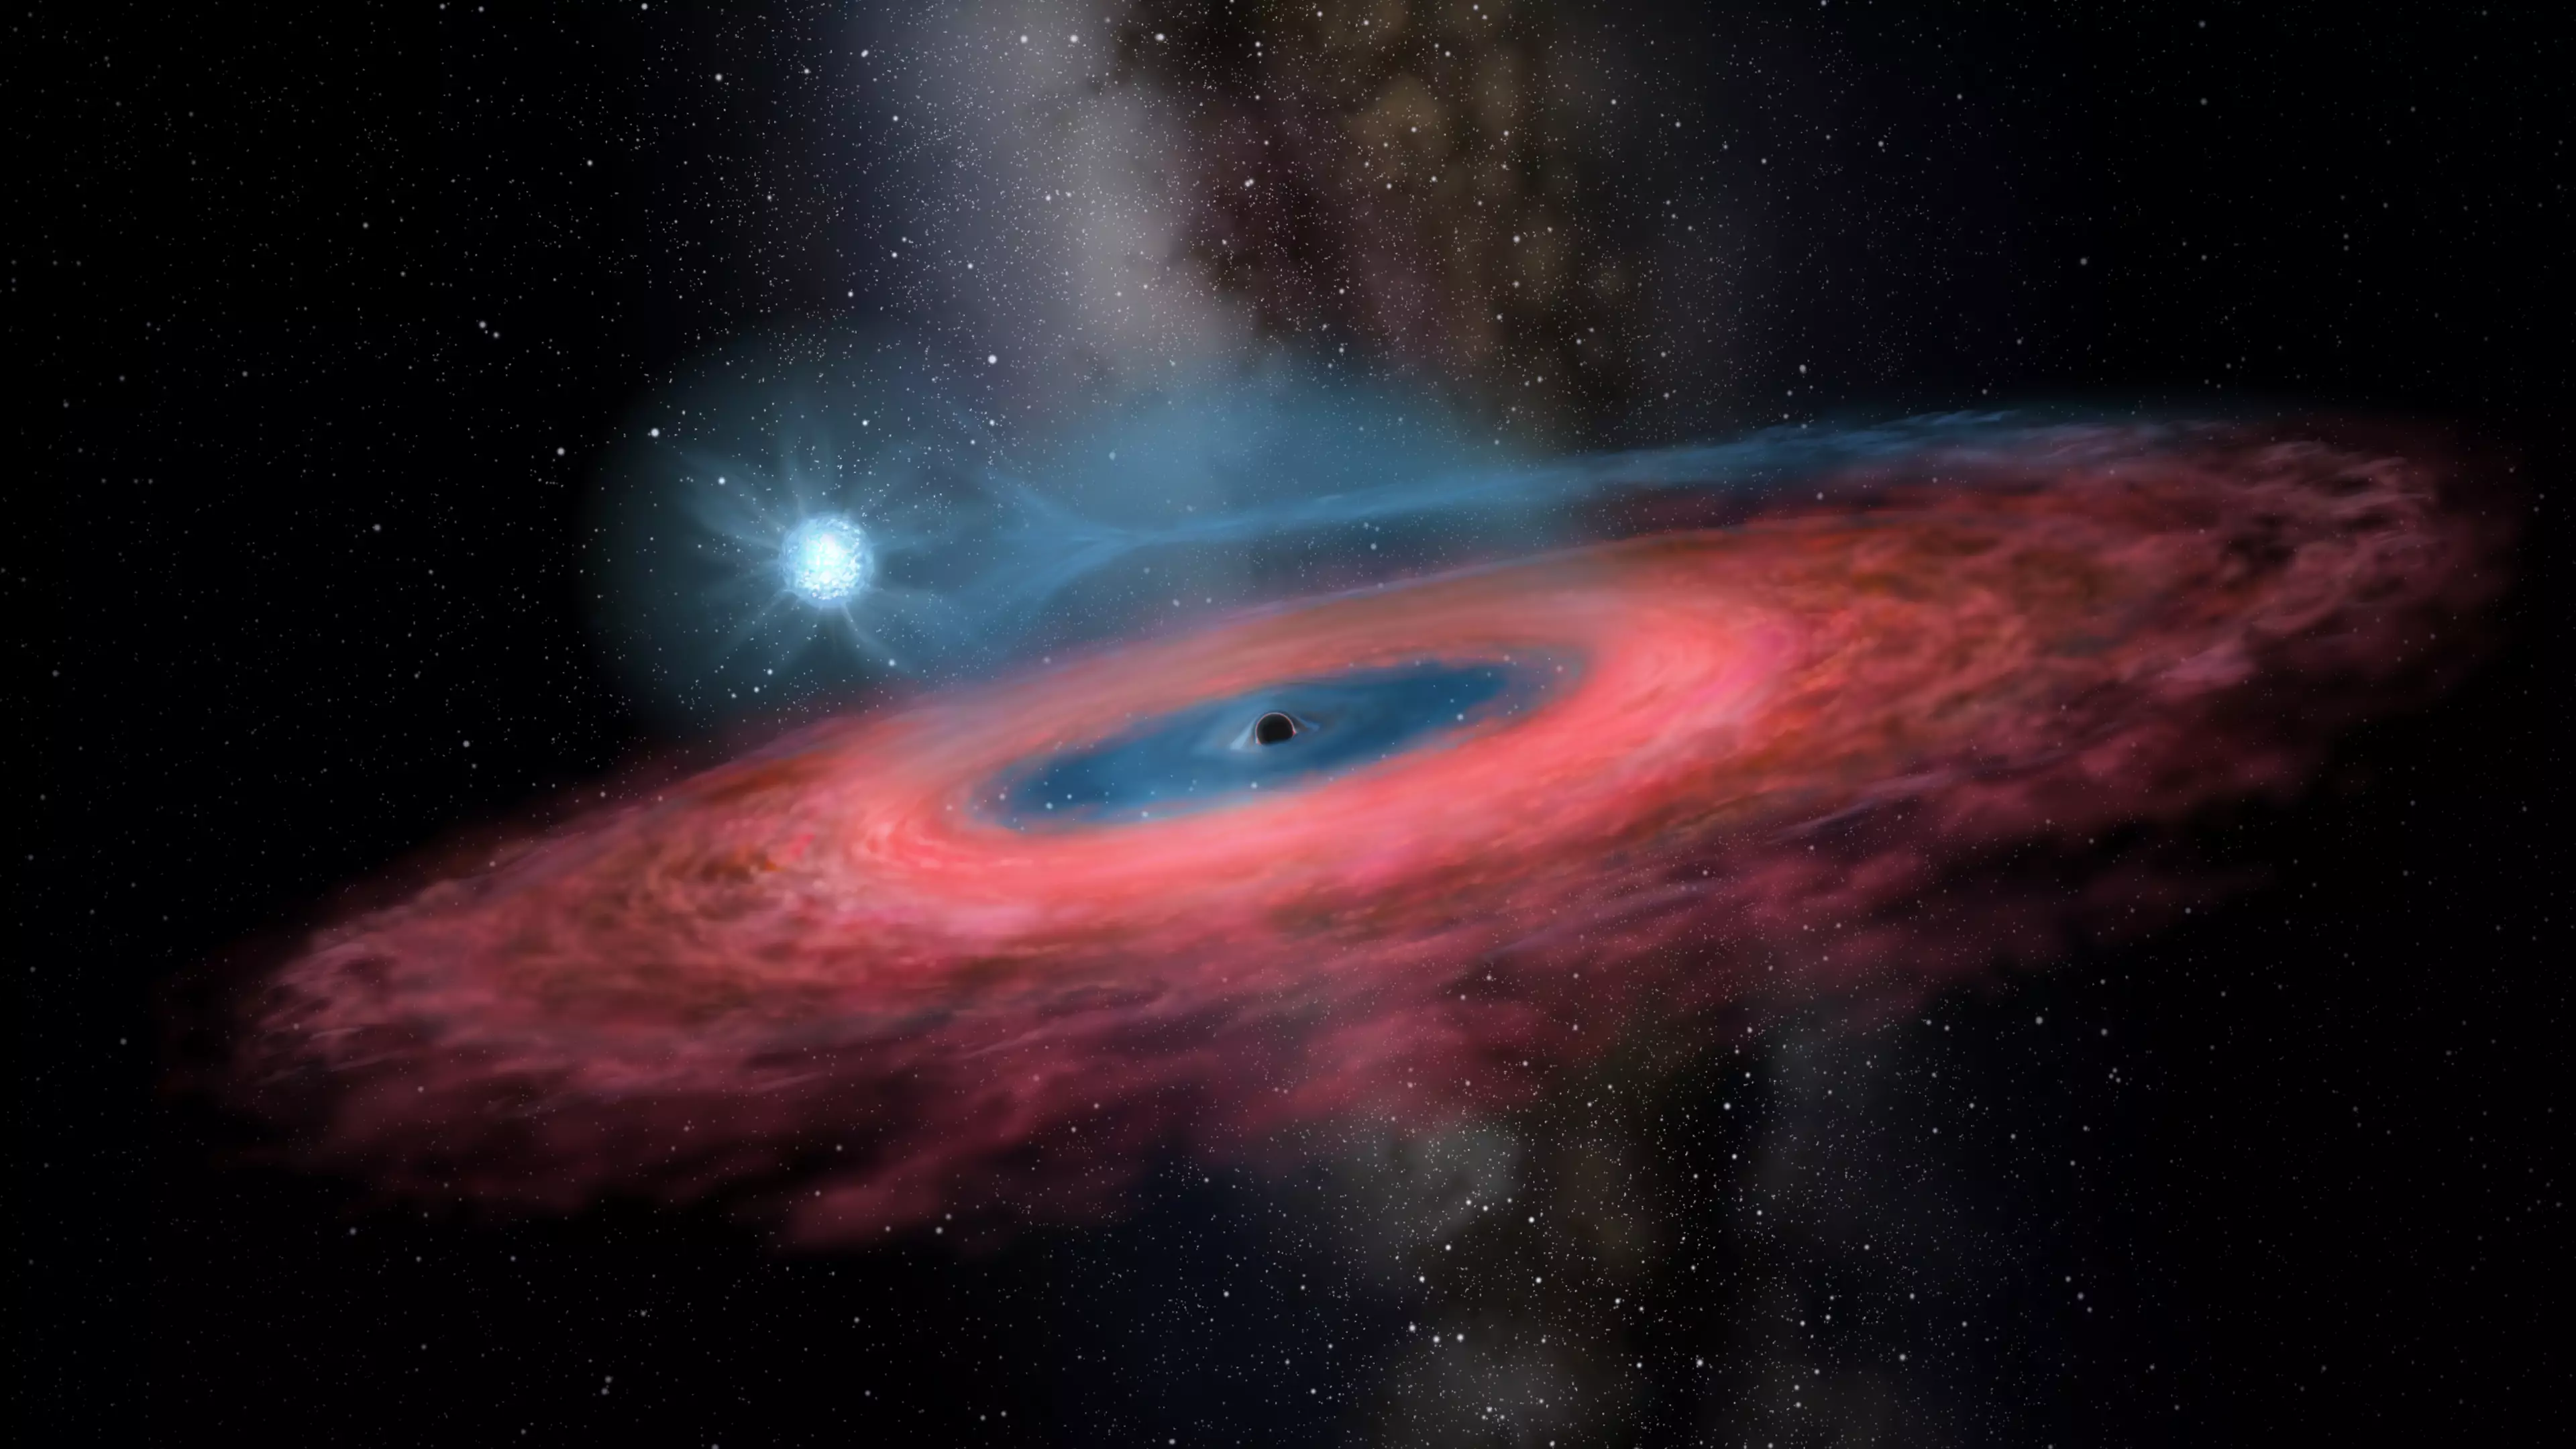 Scientists Suggest That Supermassive Black Holes Could Be Traversable Wormholes